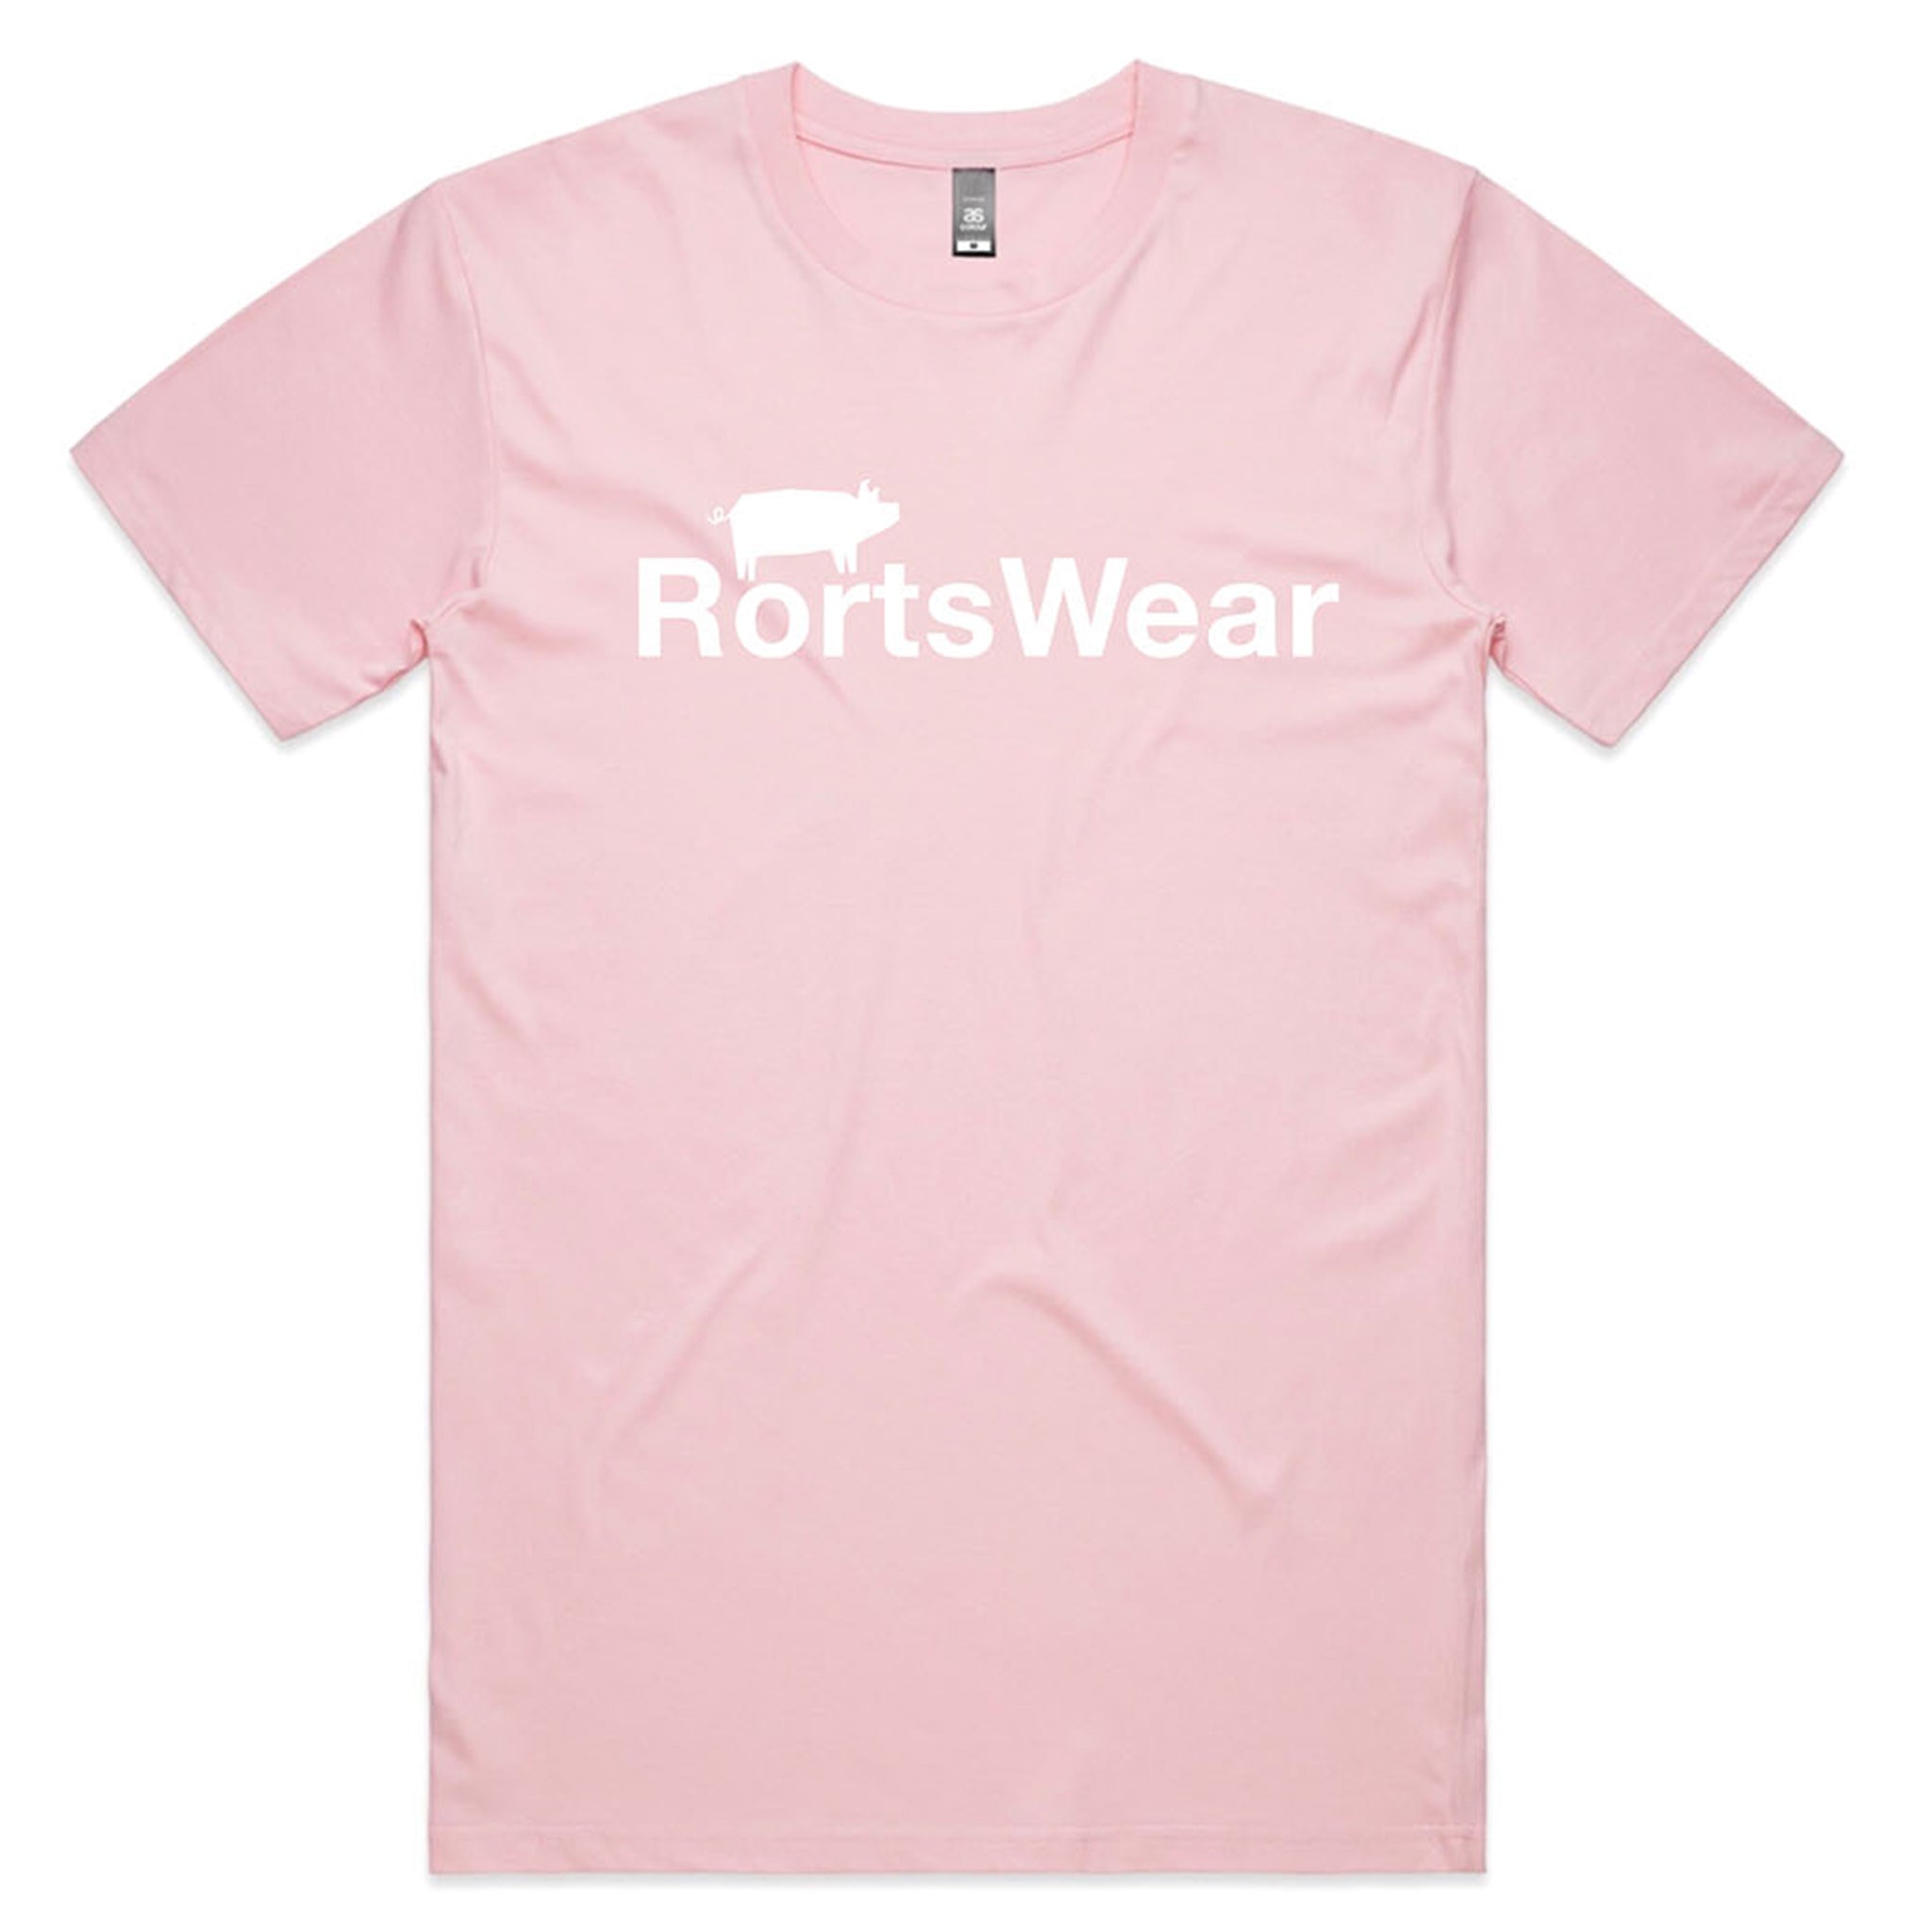 Rortswear Text Tee